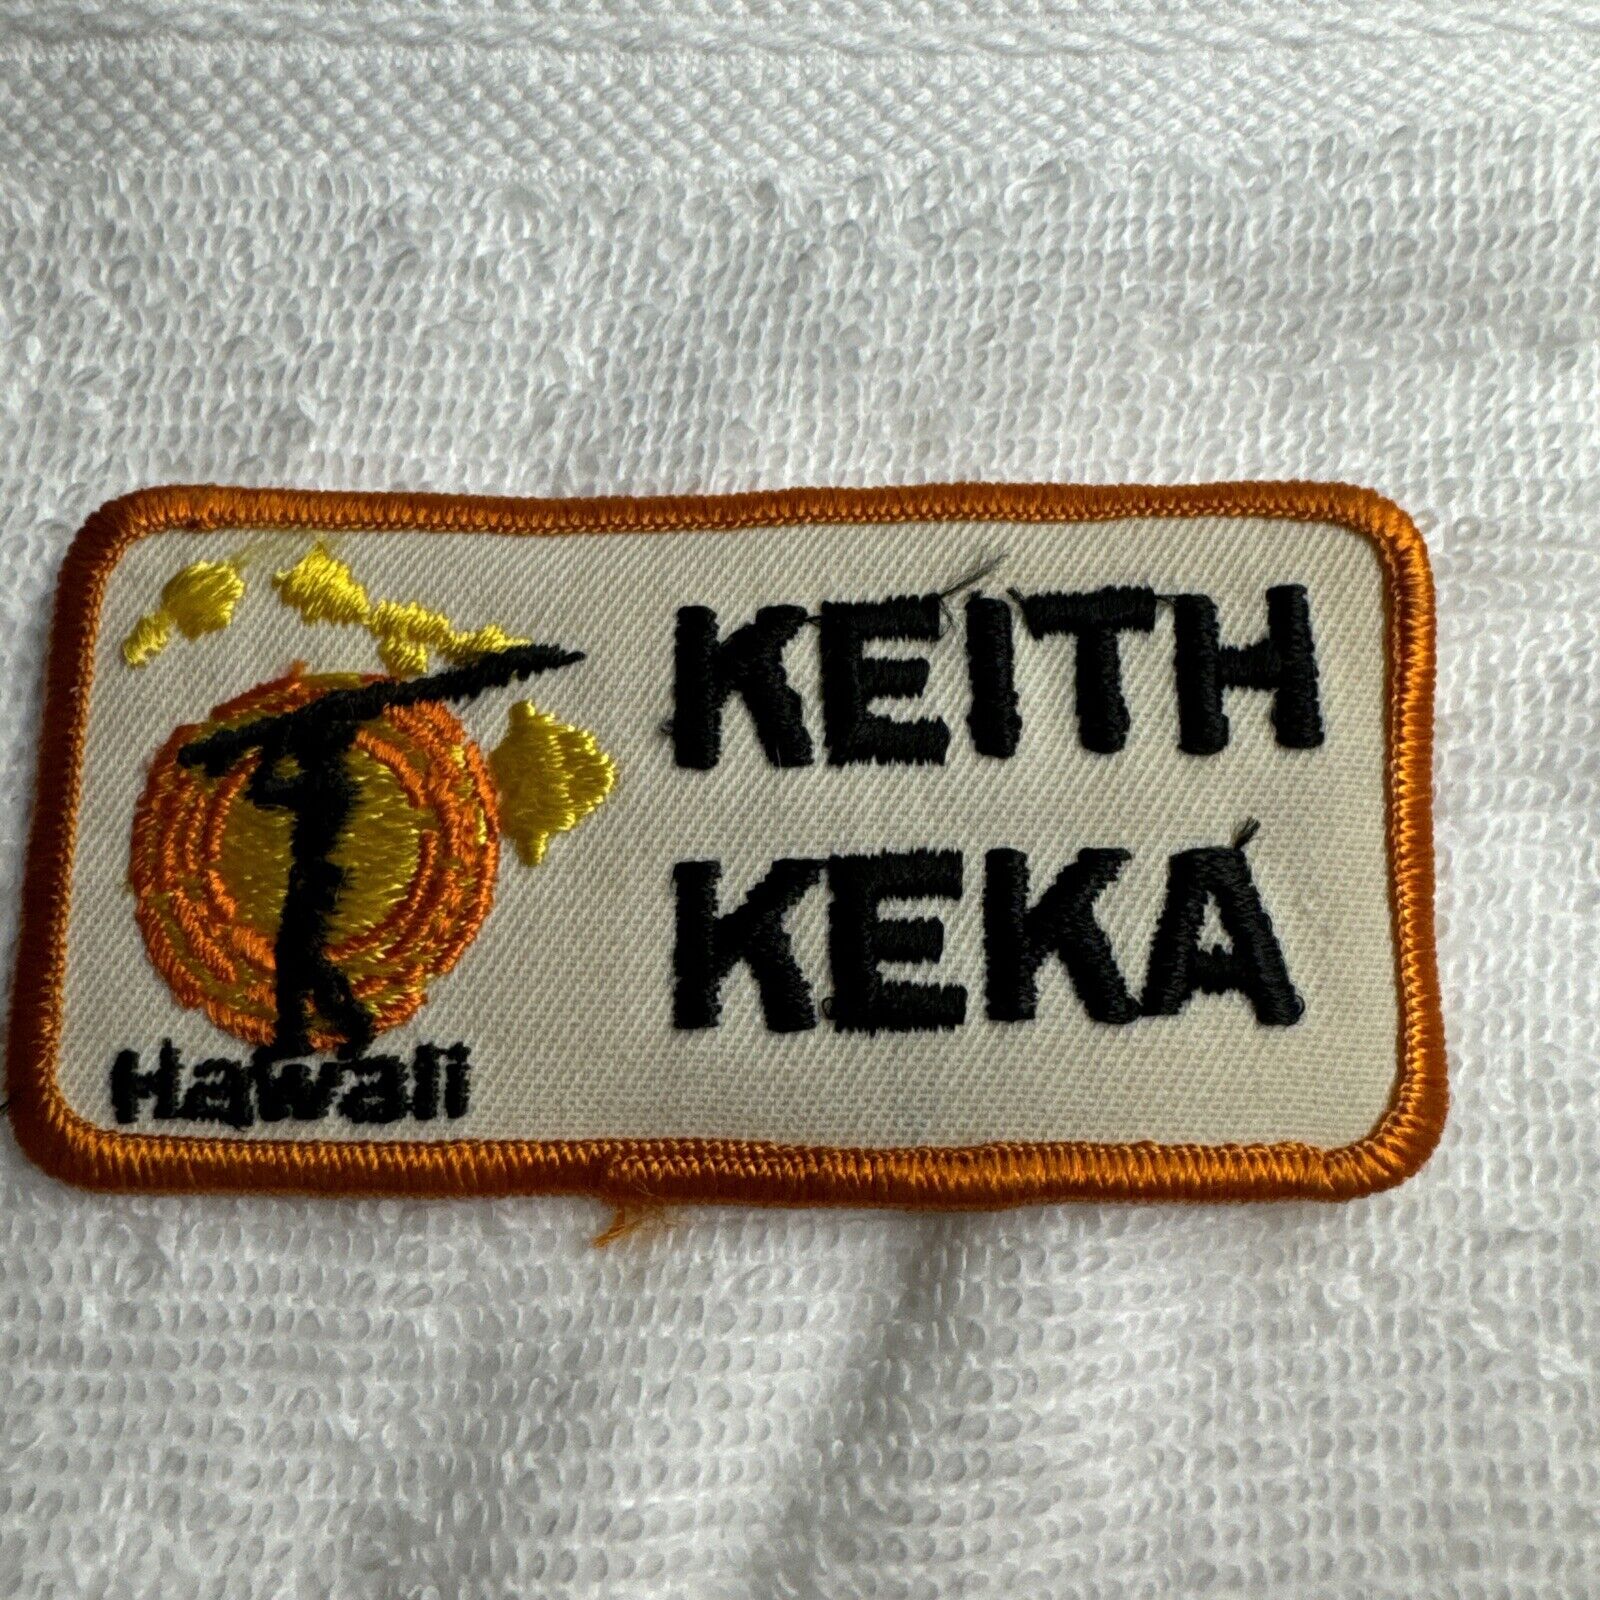 VINTAGE NEW HAWAII Keith Keka NAME SURFER SURFBOARD PATCH